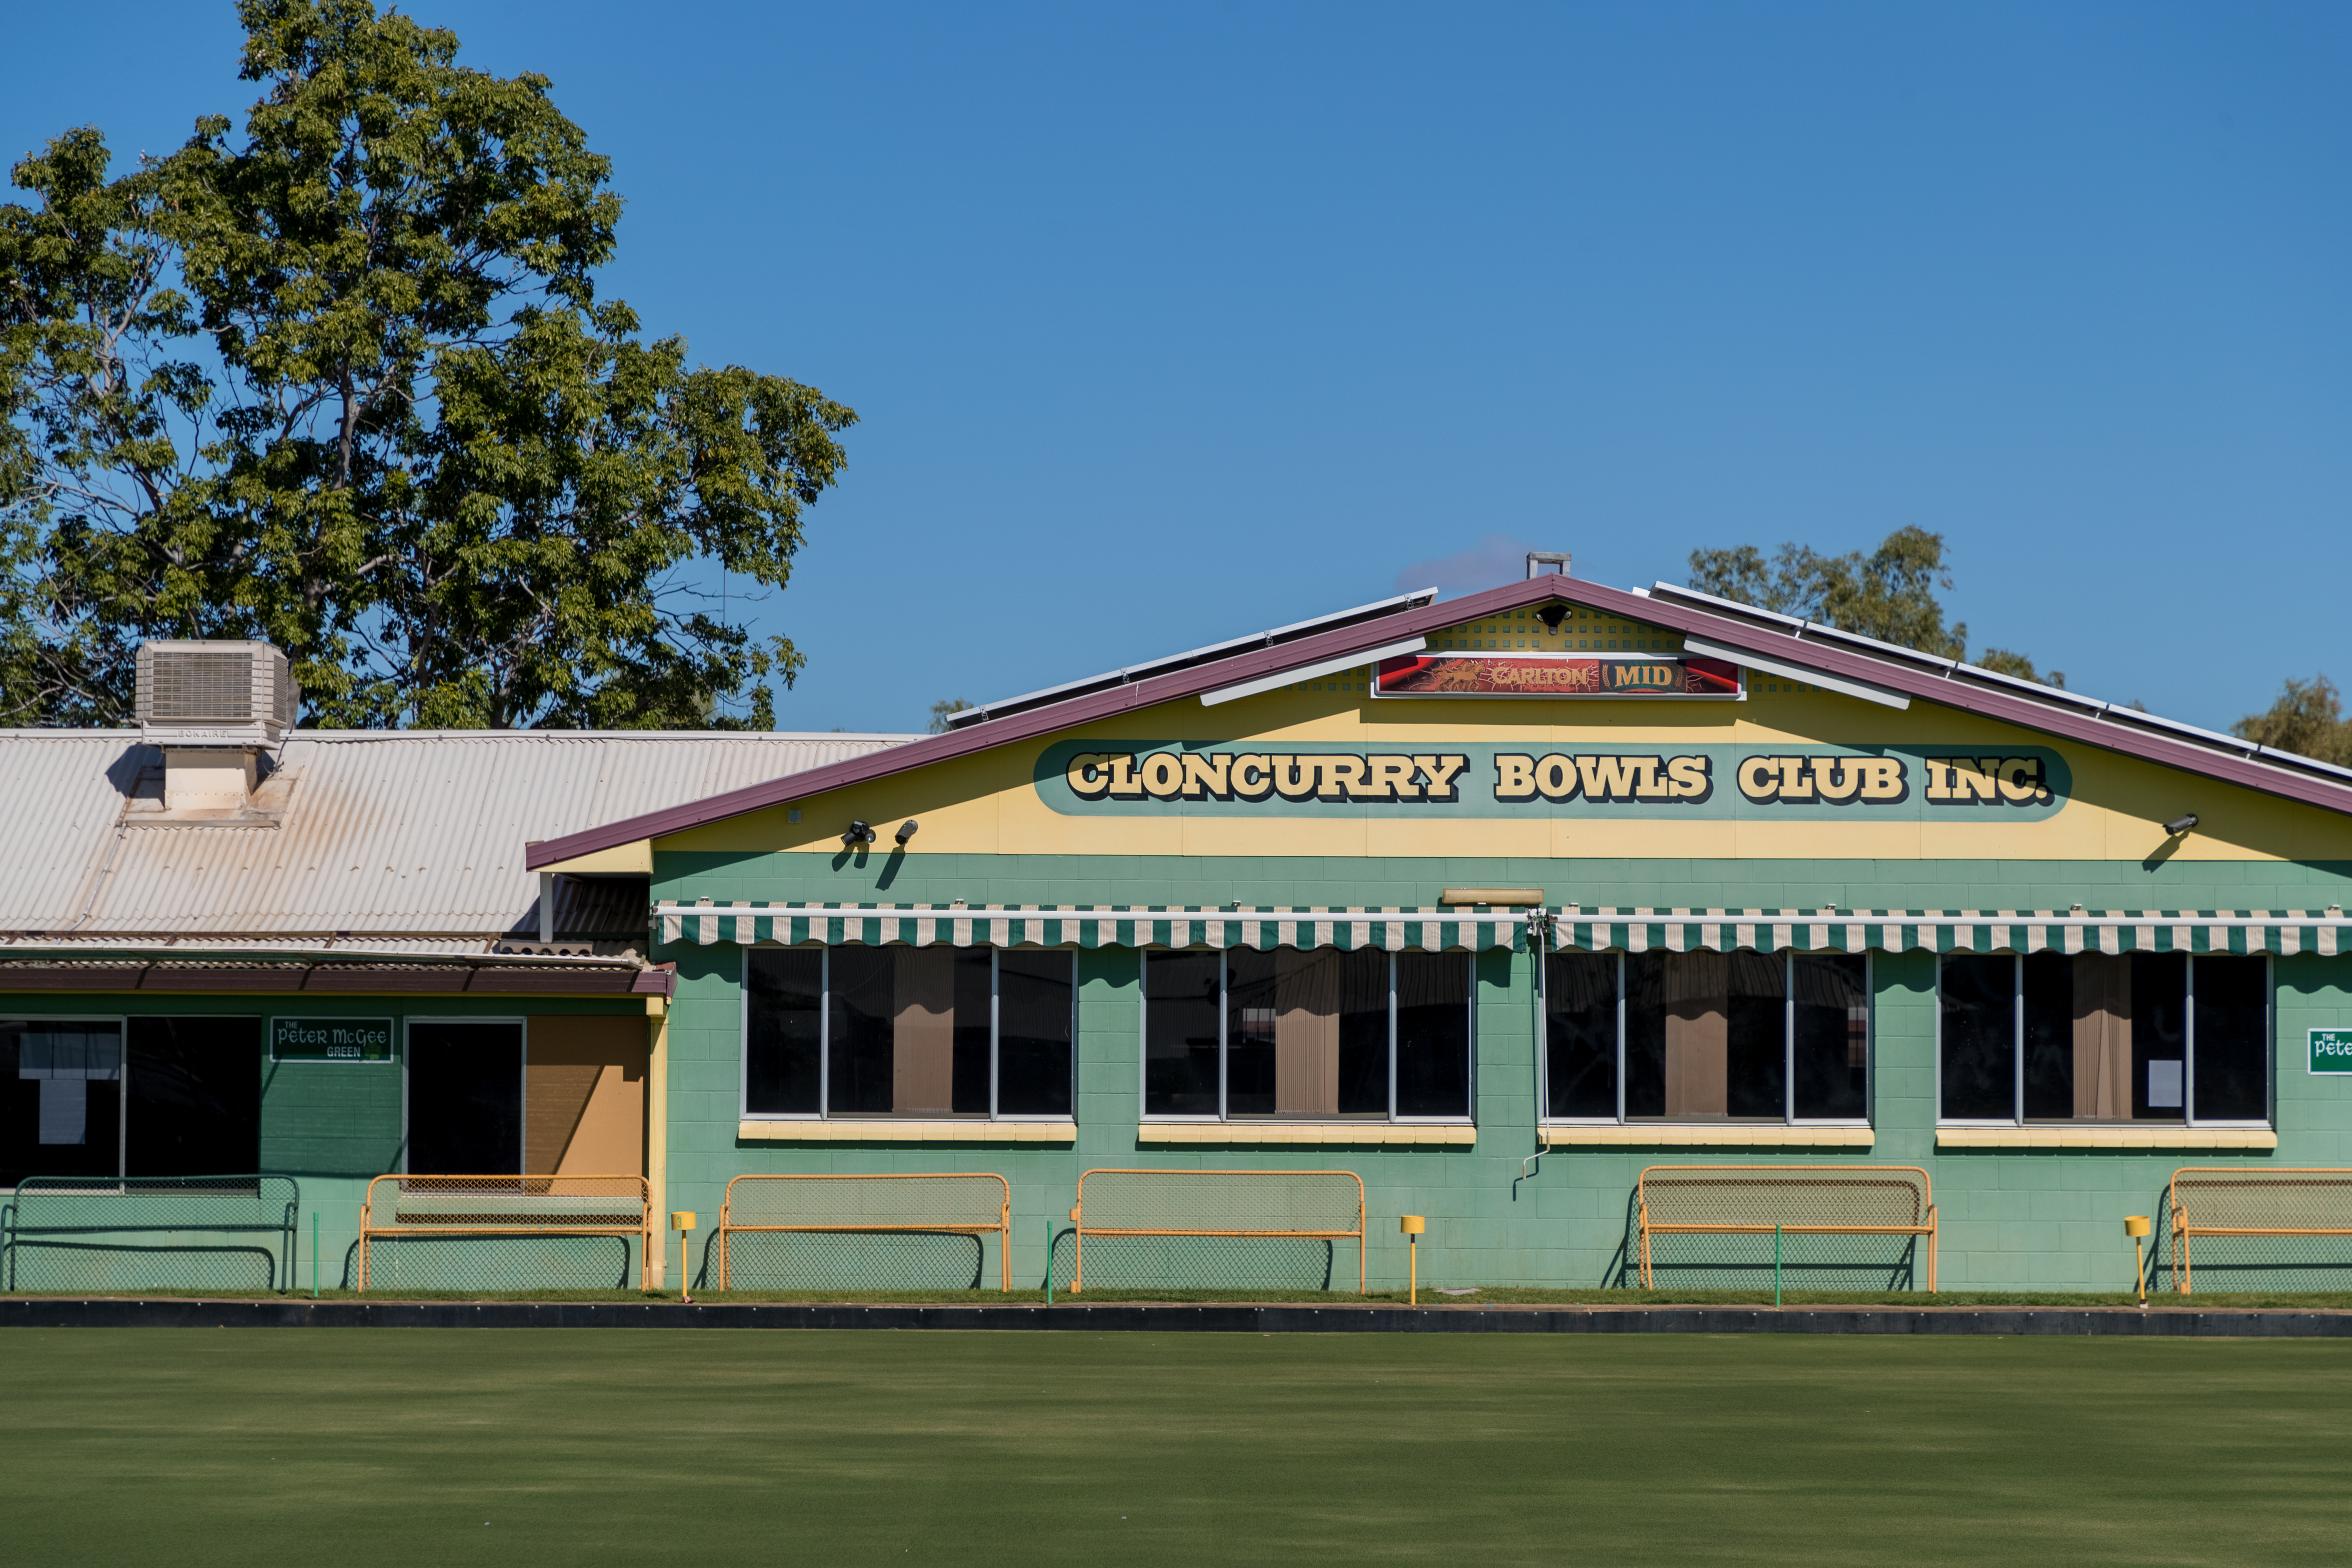 Cloncurry Bowls Club